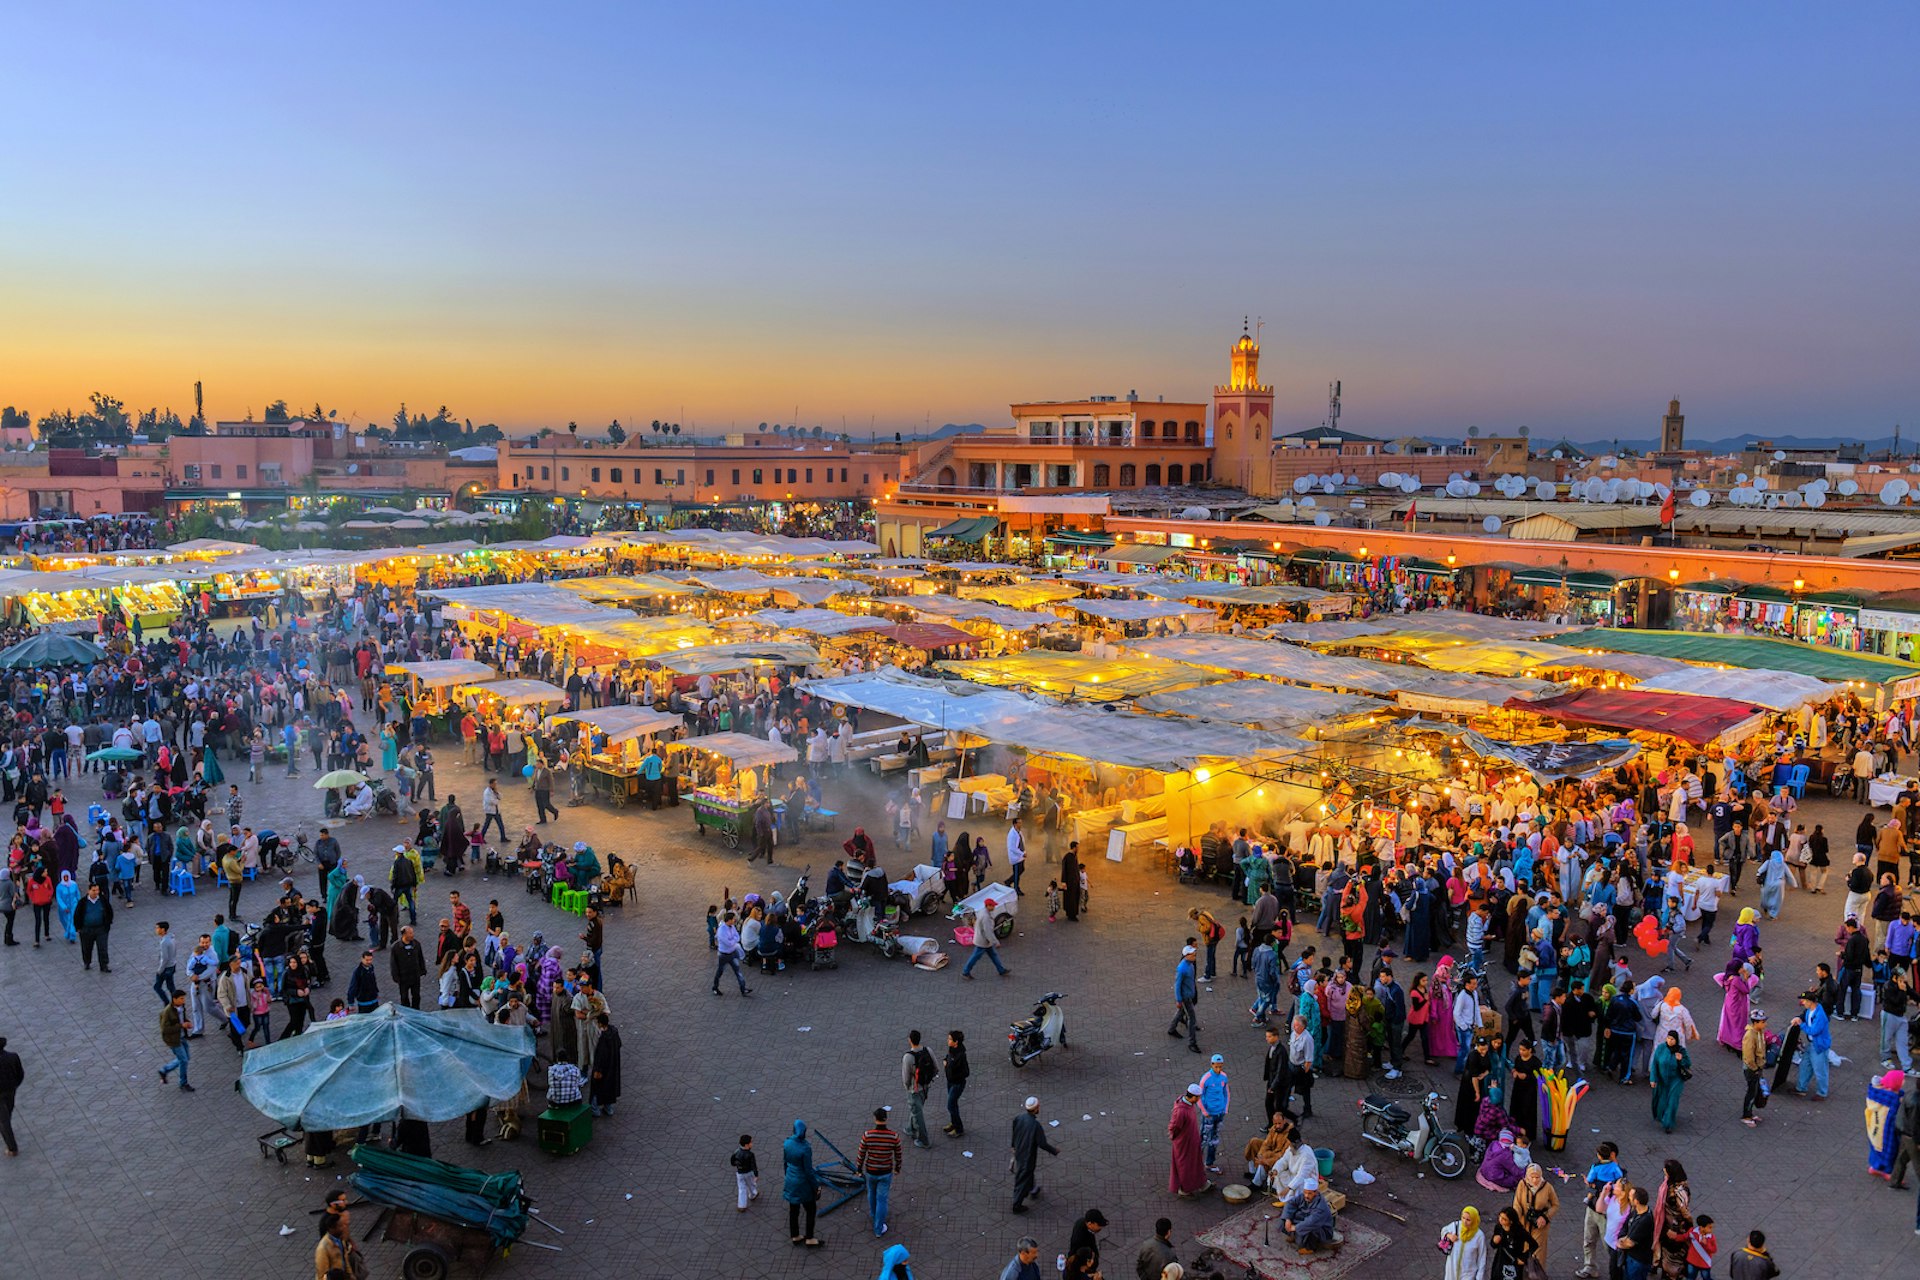 Stalls in Marrakesh's famous Djemaa El Fna square